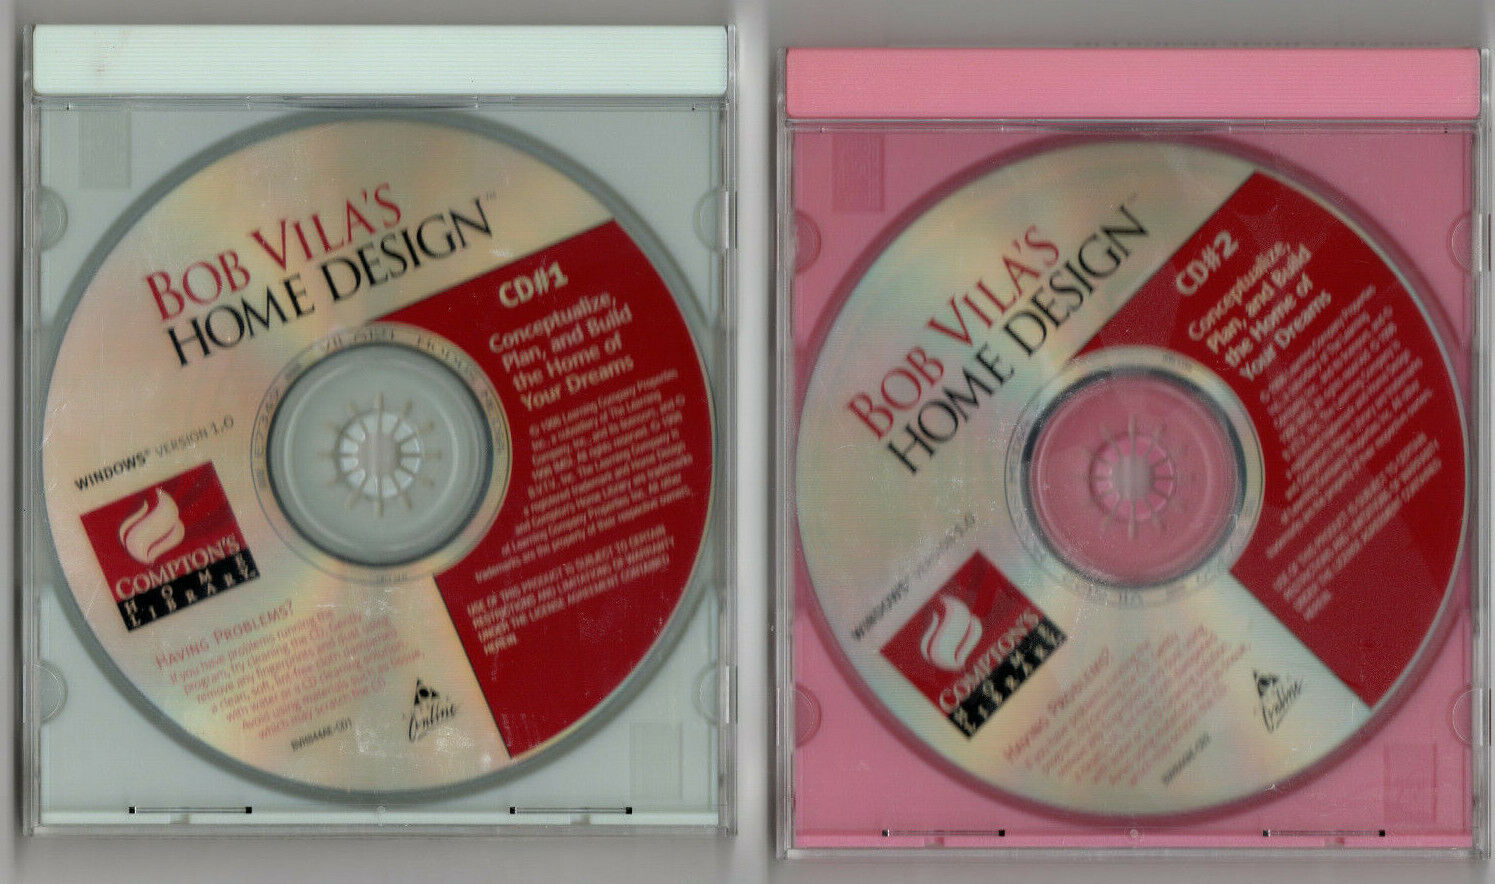 Bob Vila's Home Design - Windows Version 1.0 (PC, 1998, Compton's, 2-Disc)